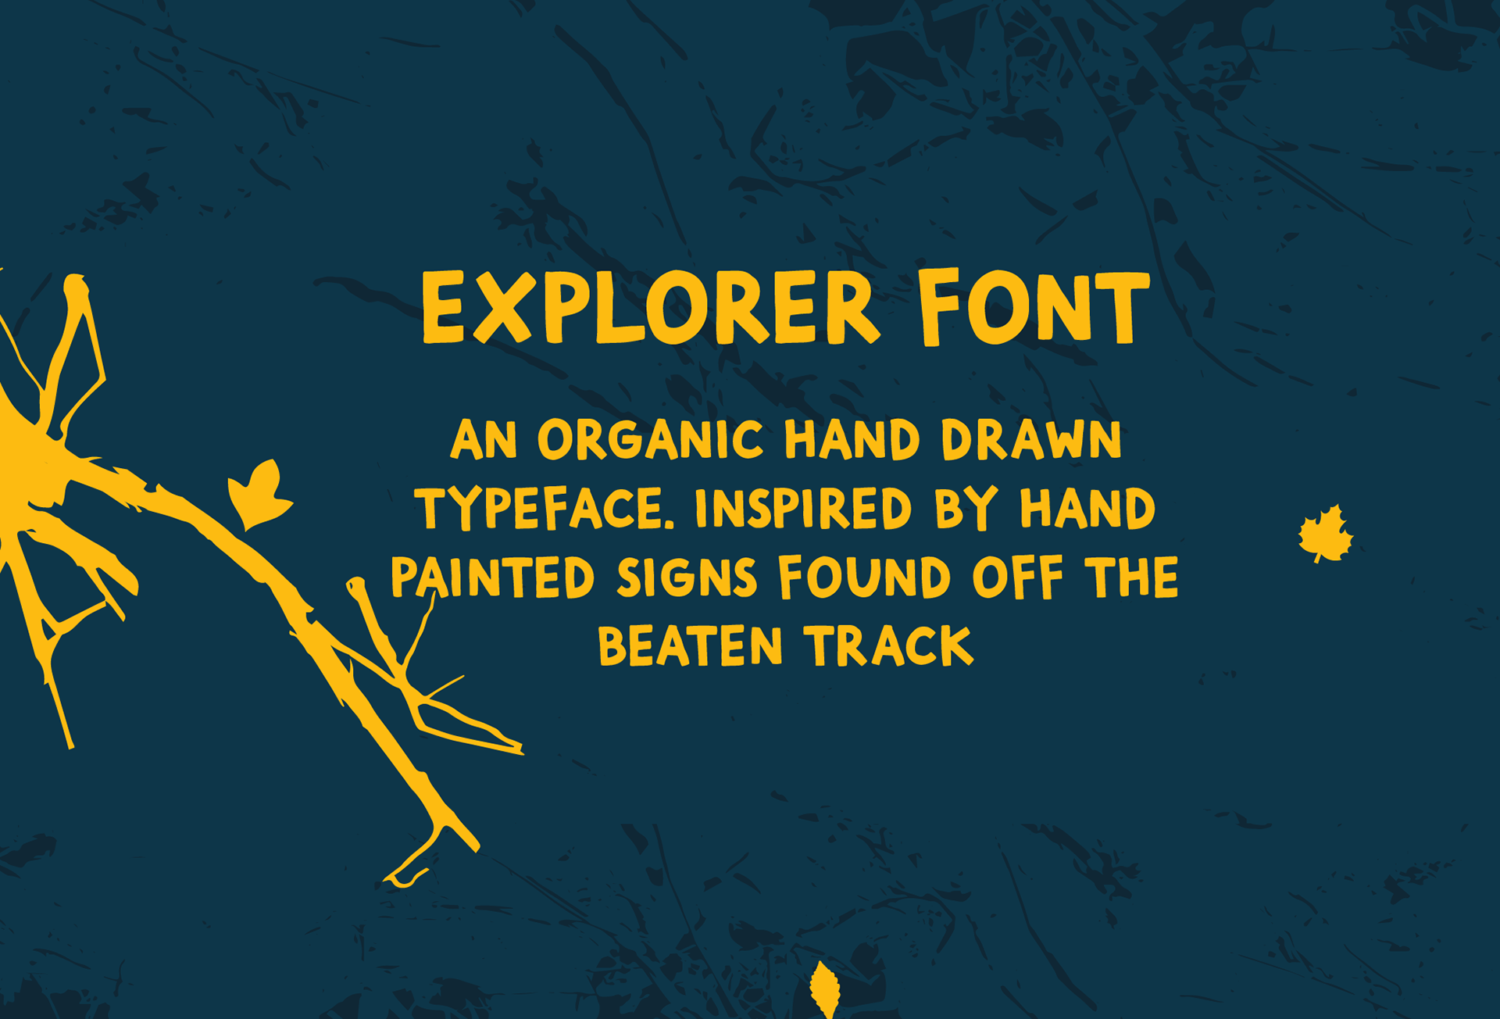 Explorer Free Font